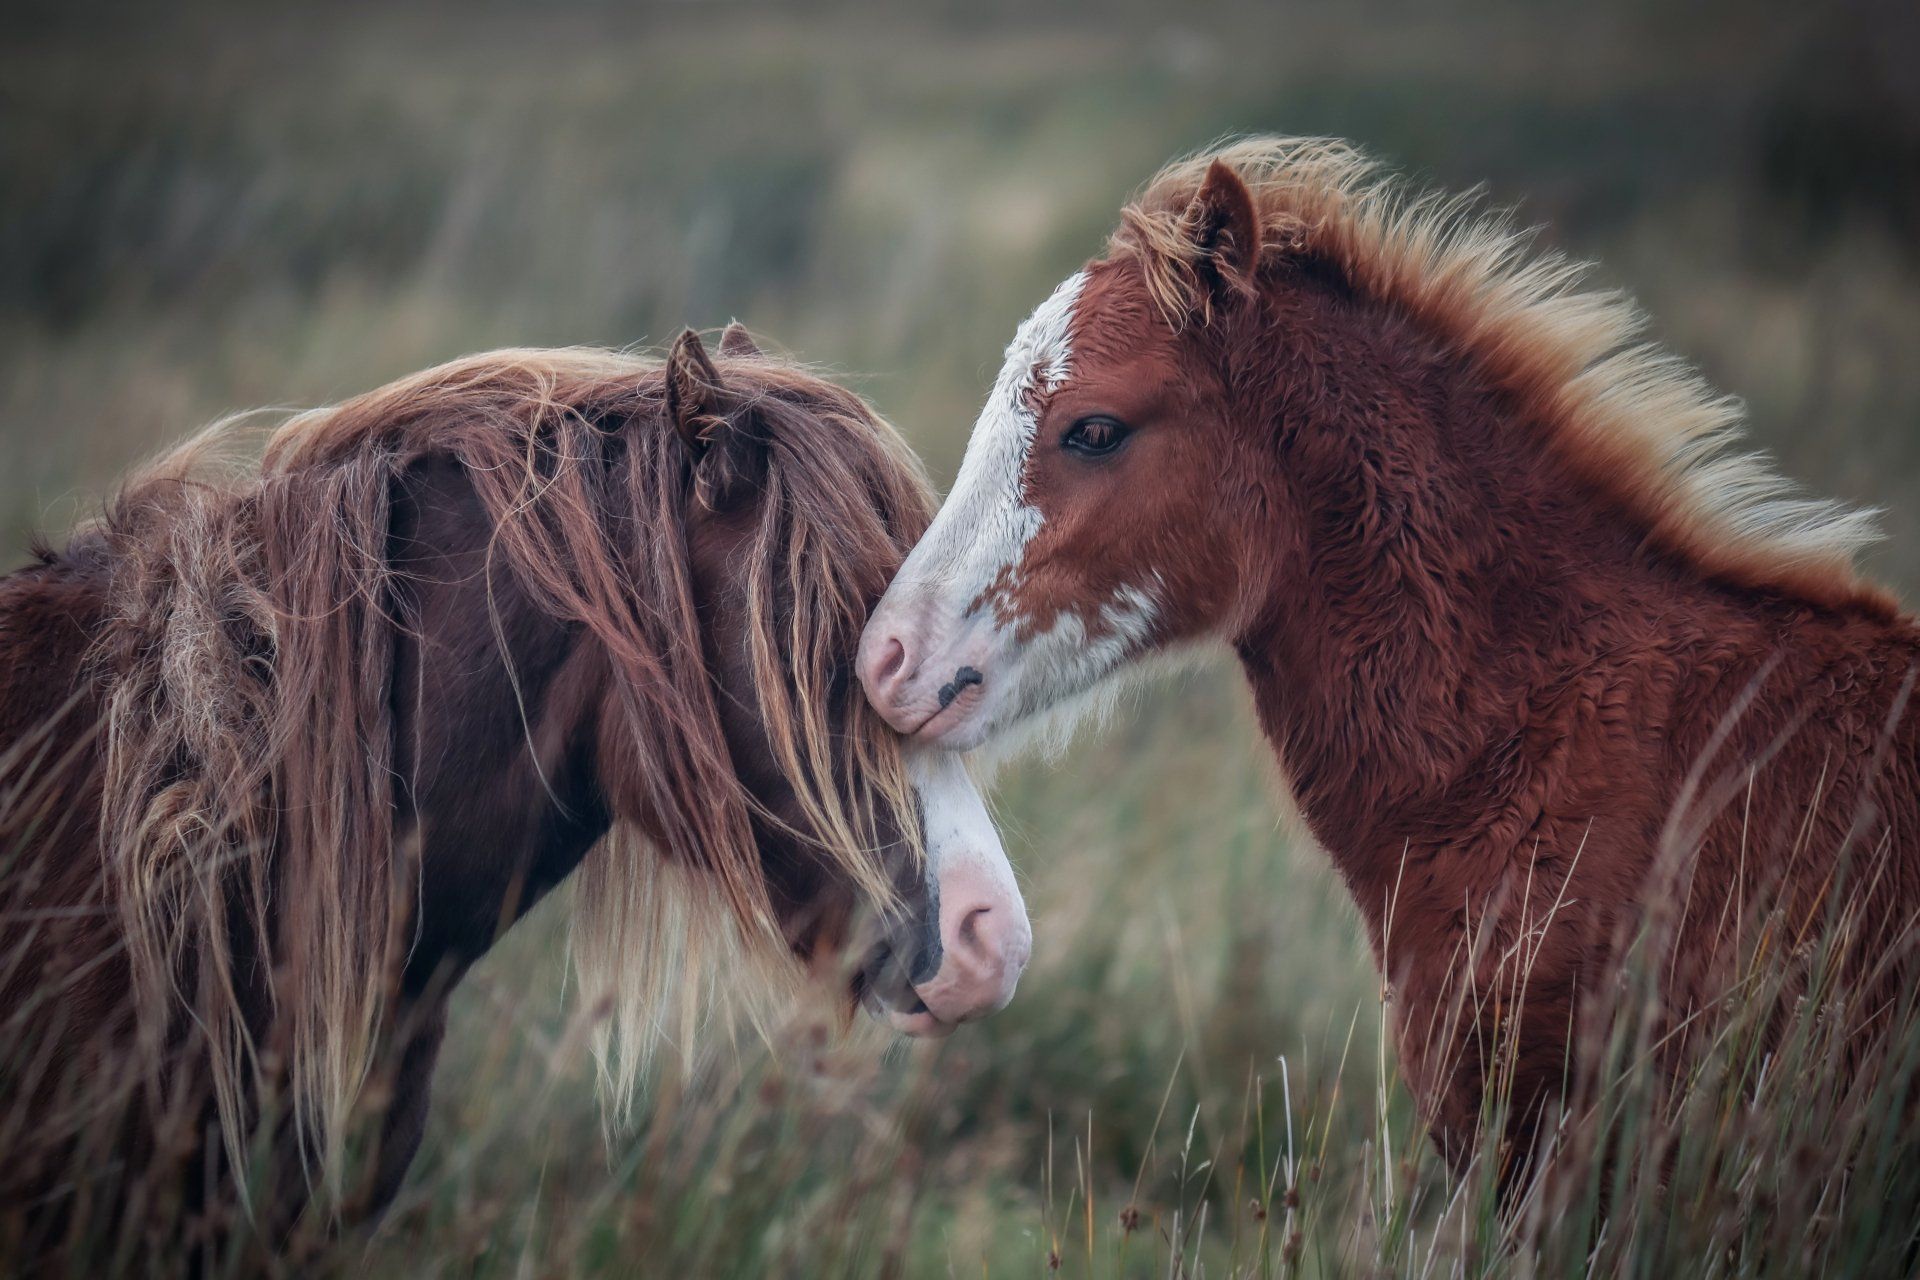 Ponies at Exmoor National Park in Somerset